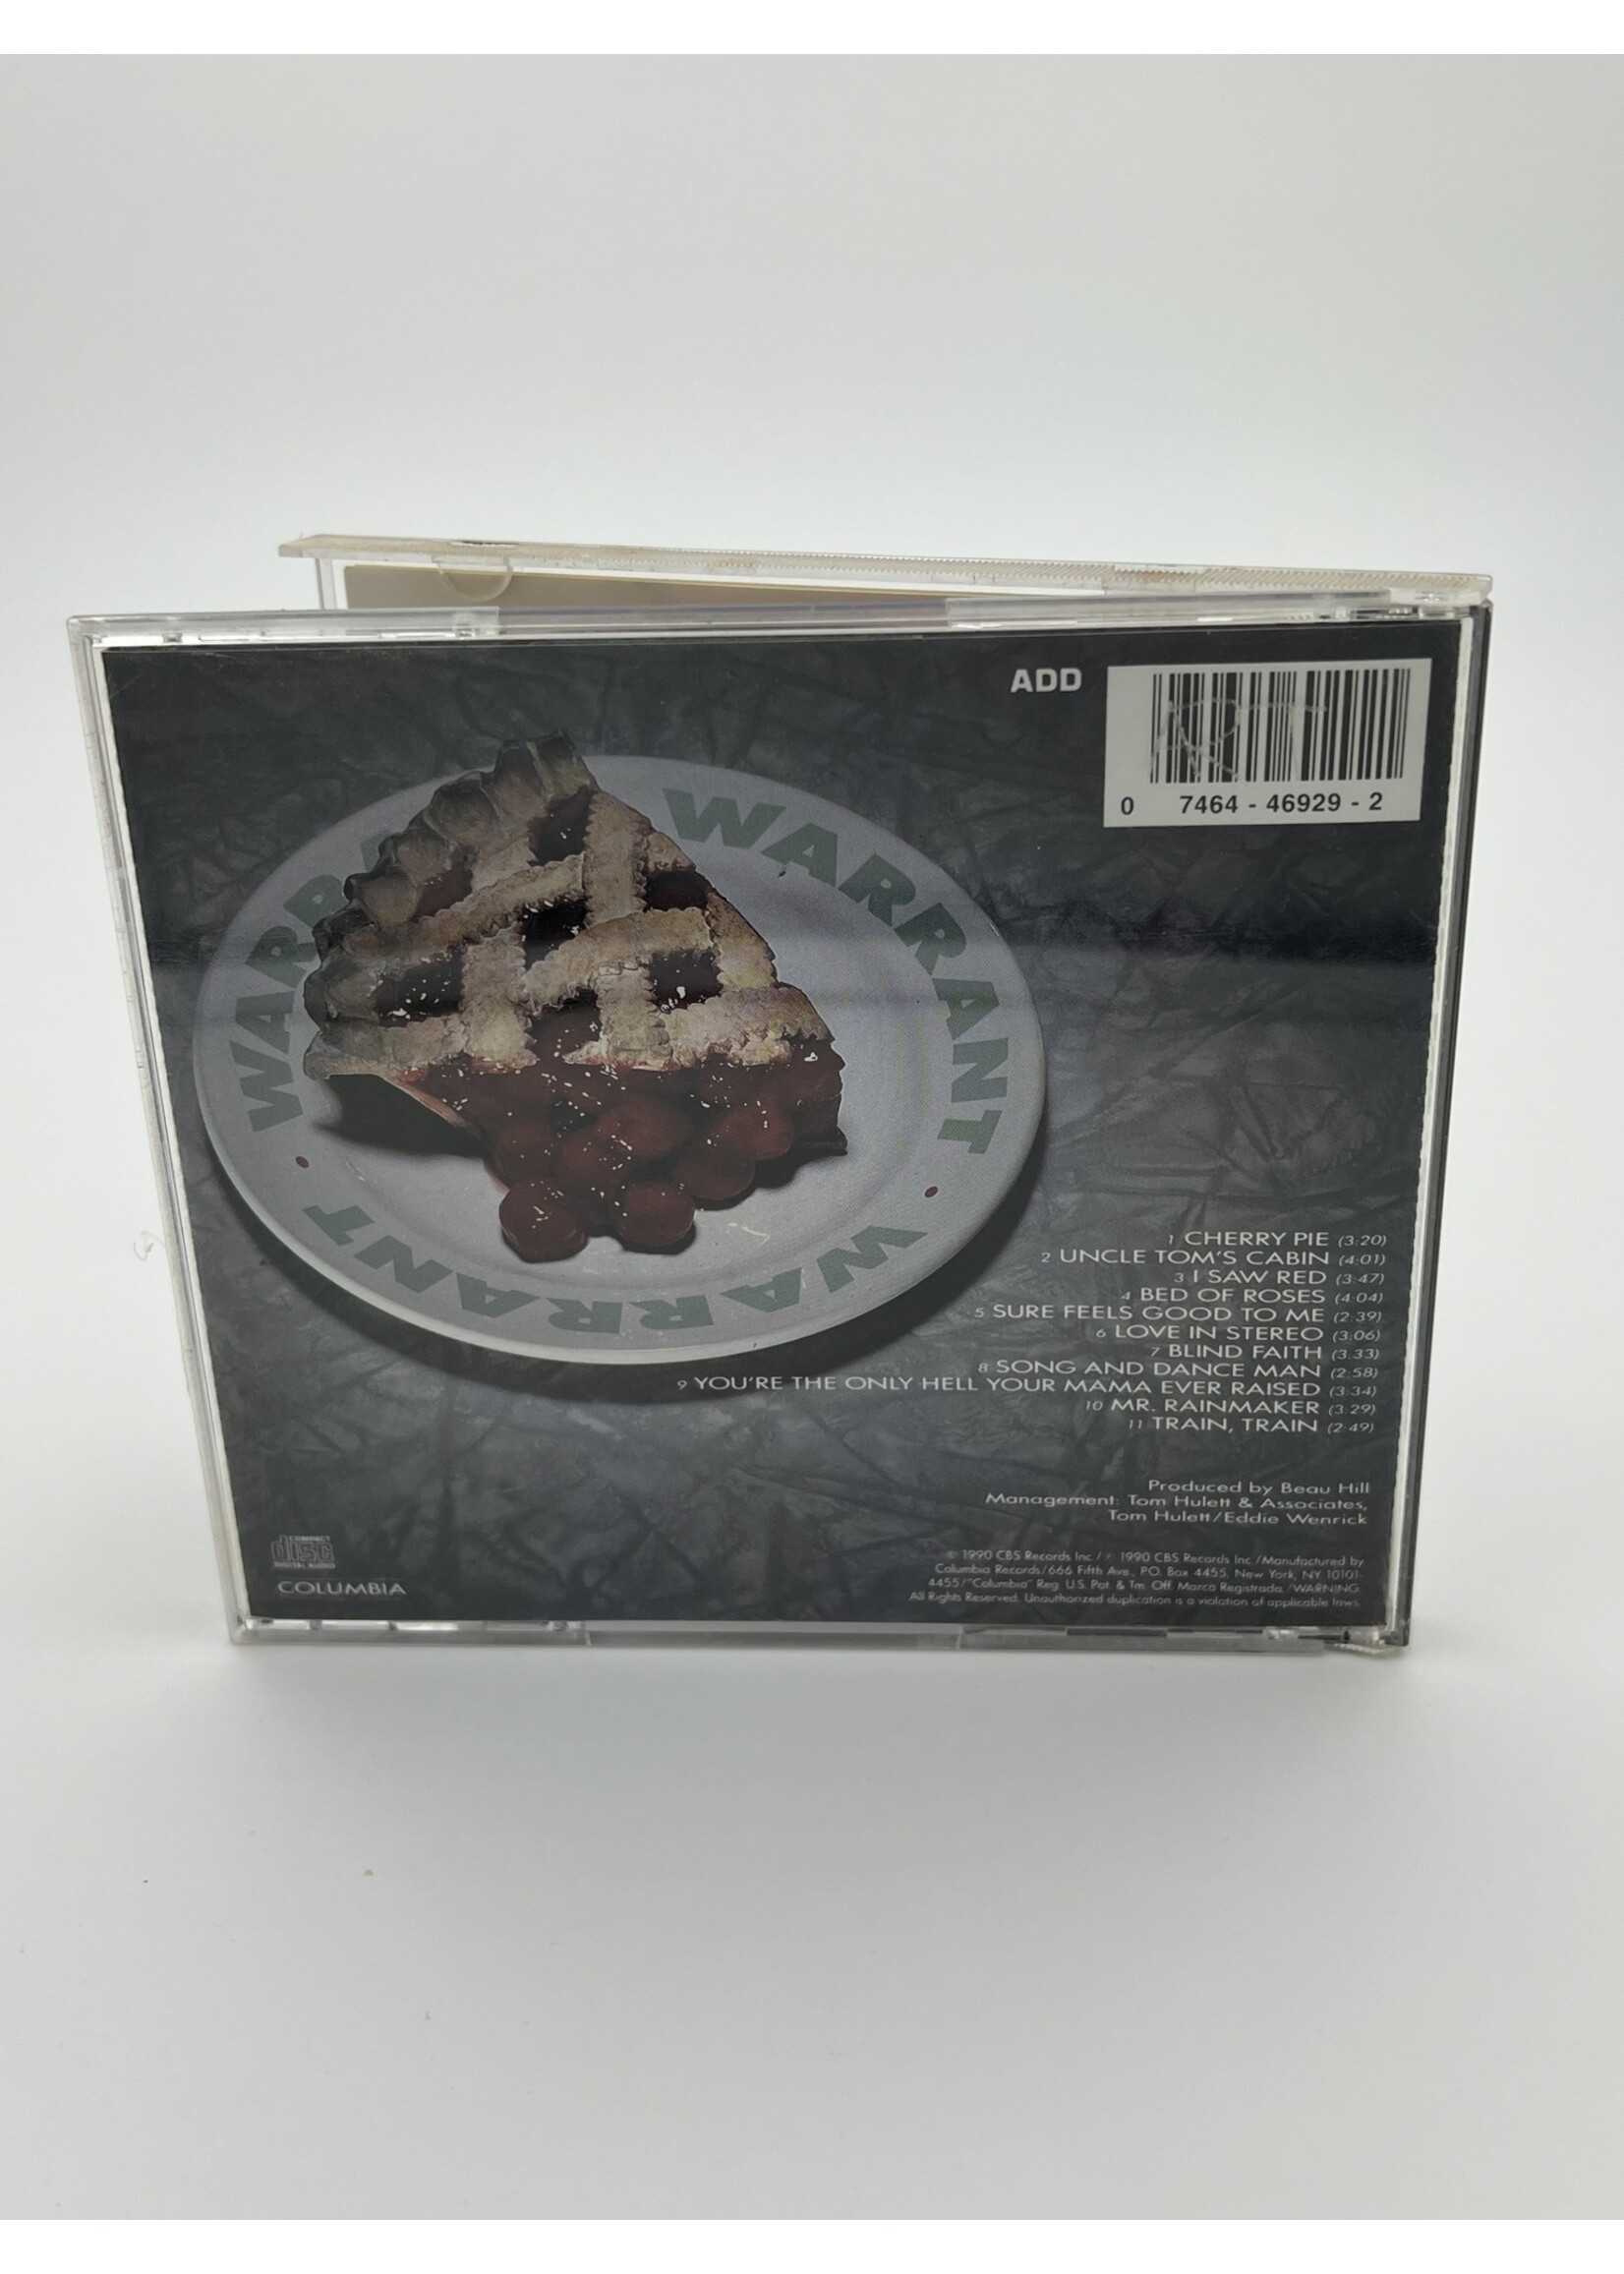 CD   Warrant Cherry Pie CD